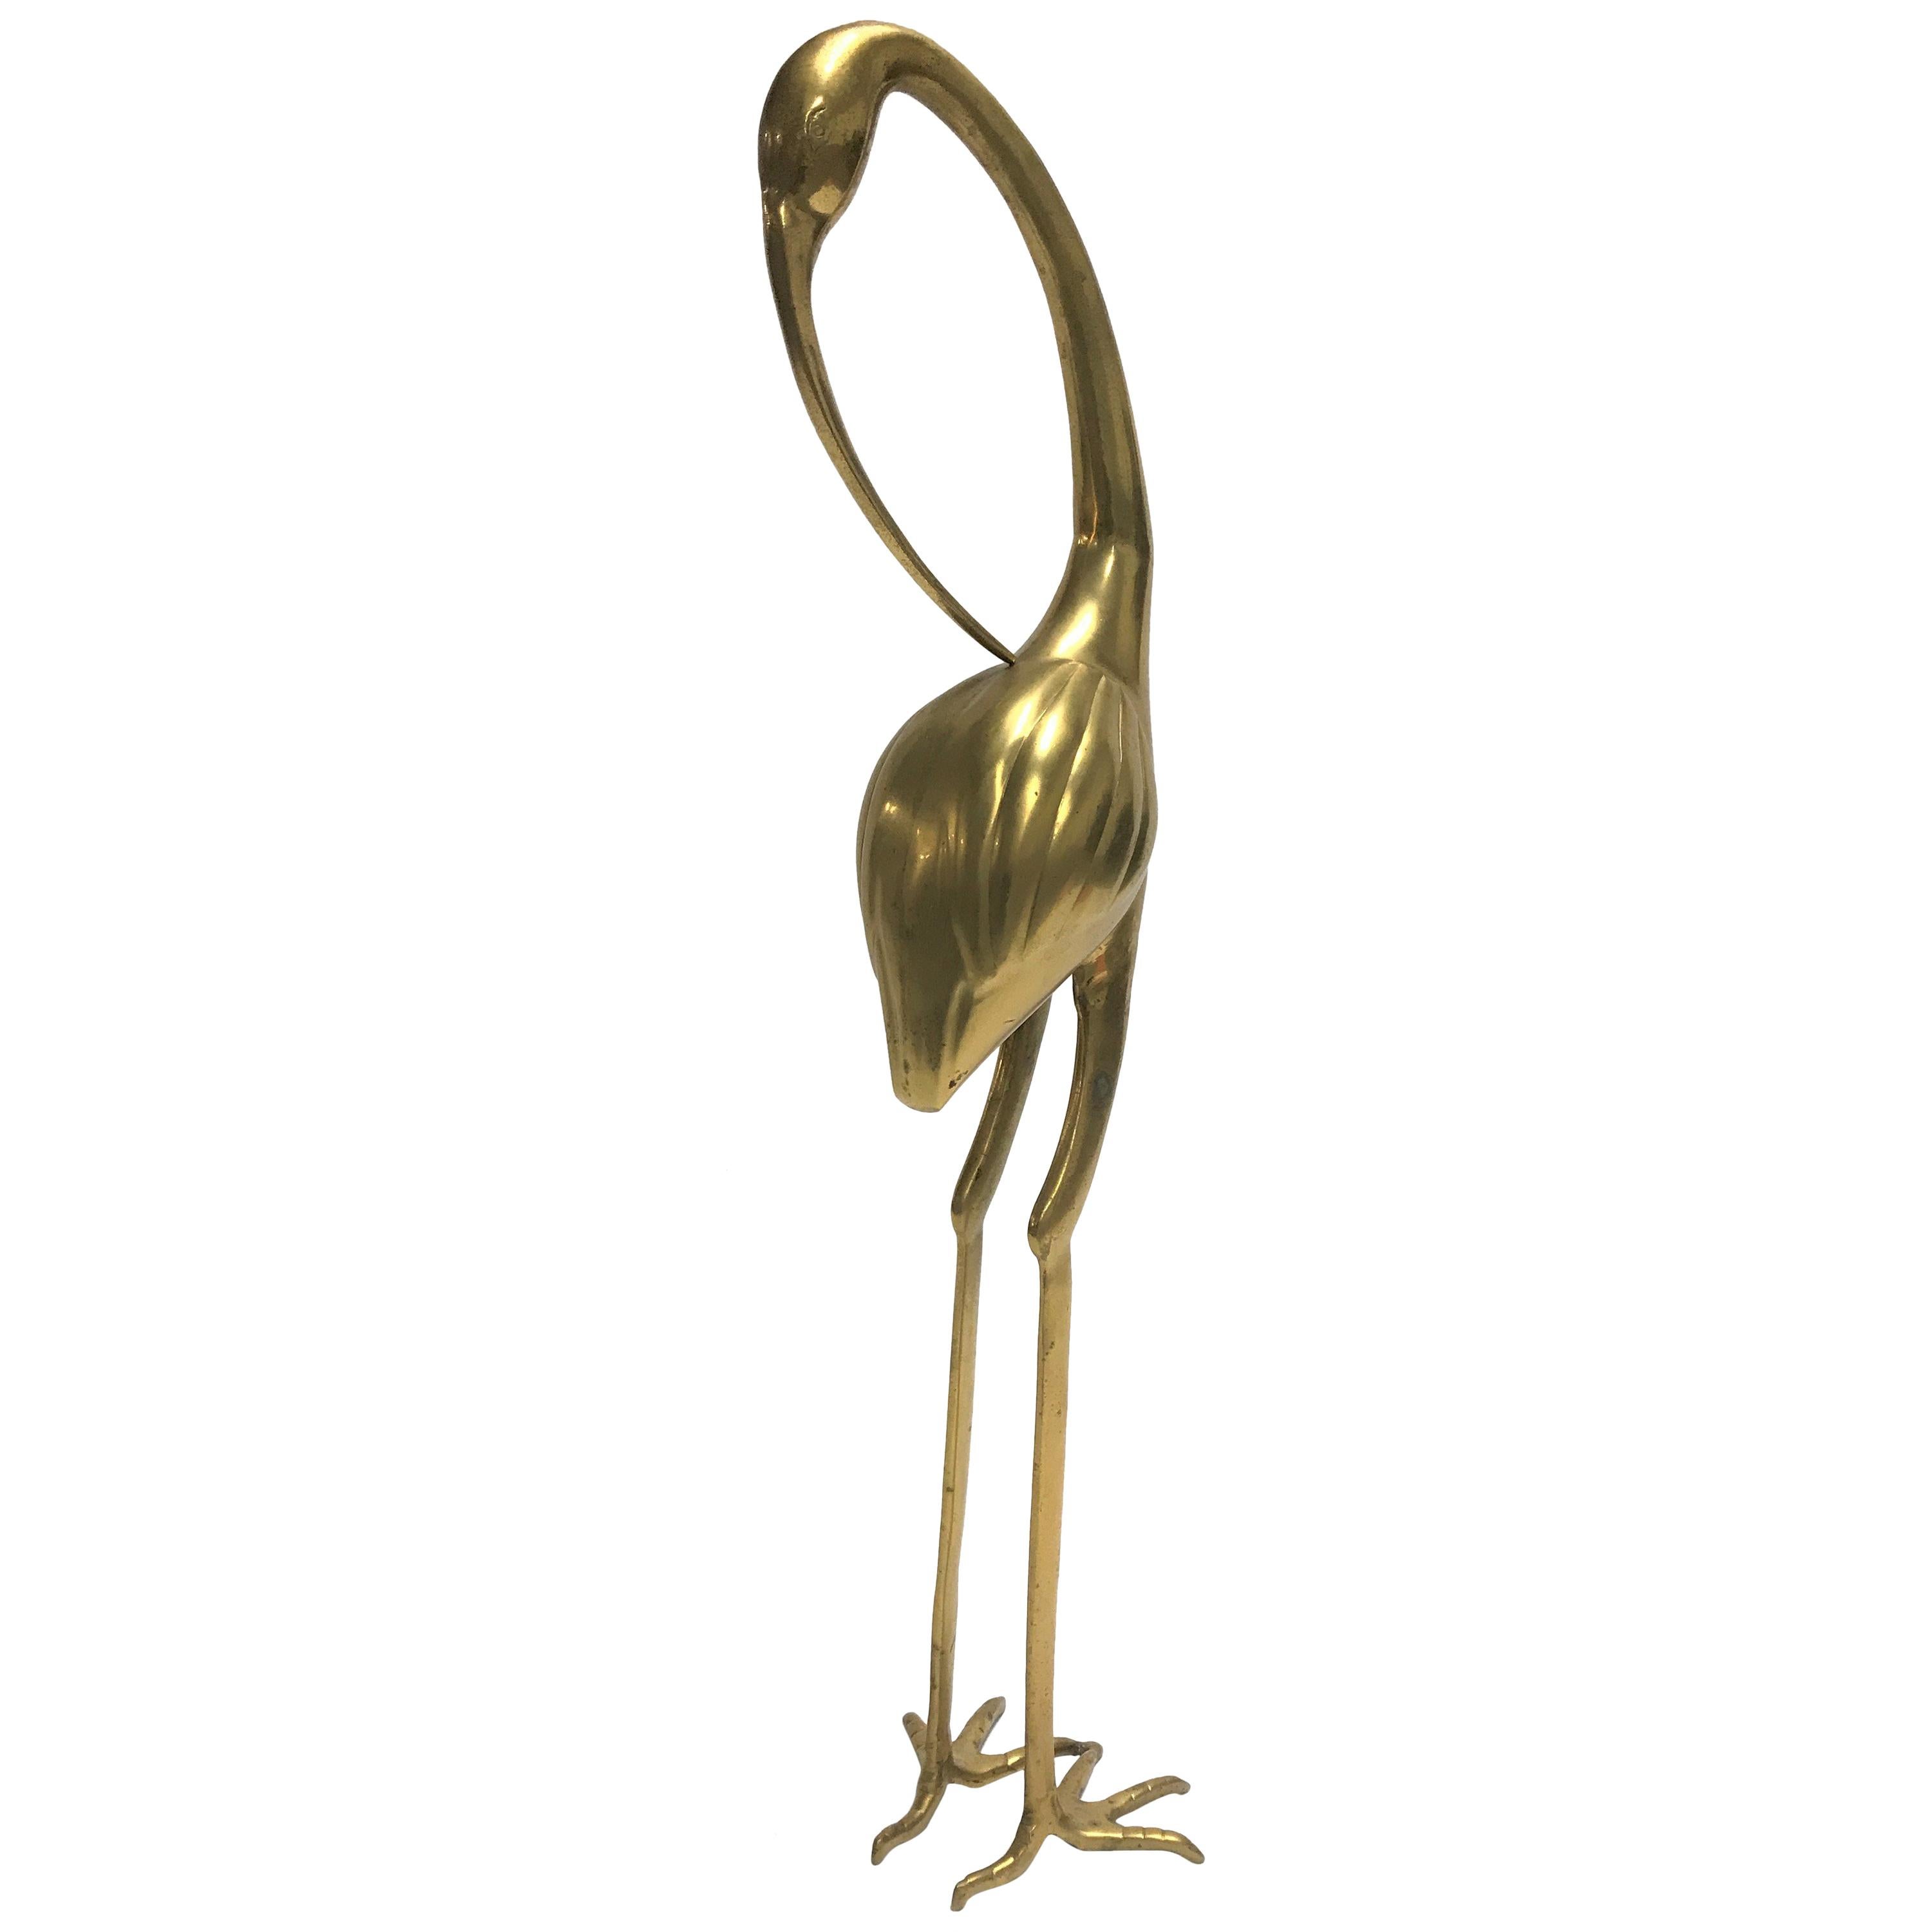 Large Vintage Brass Crane Bird, 1970s